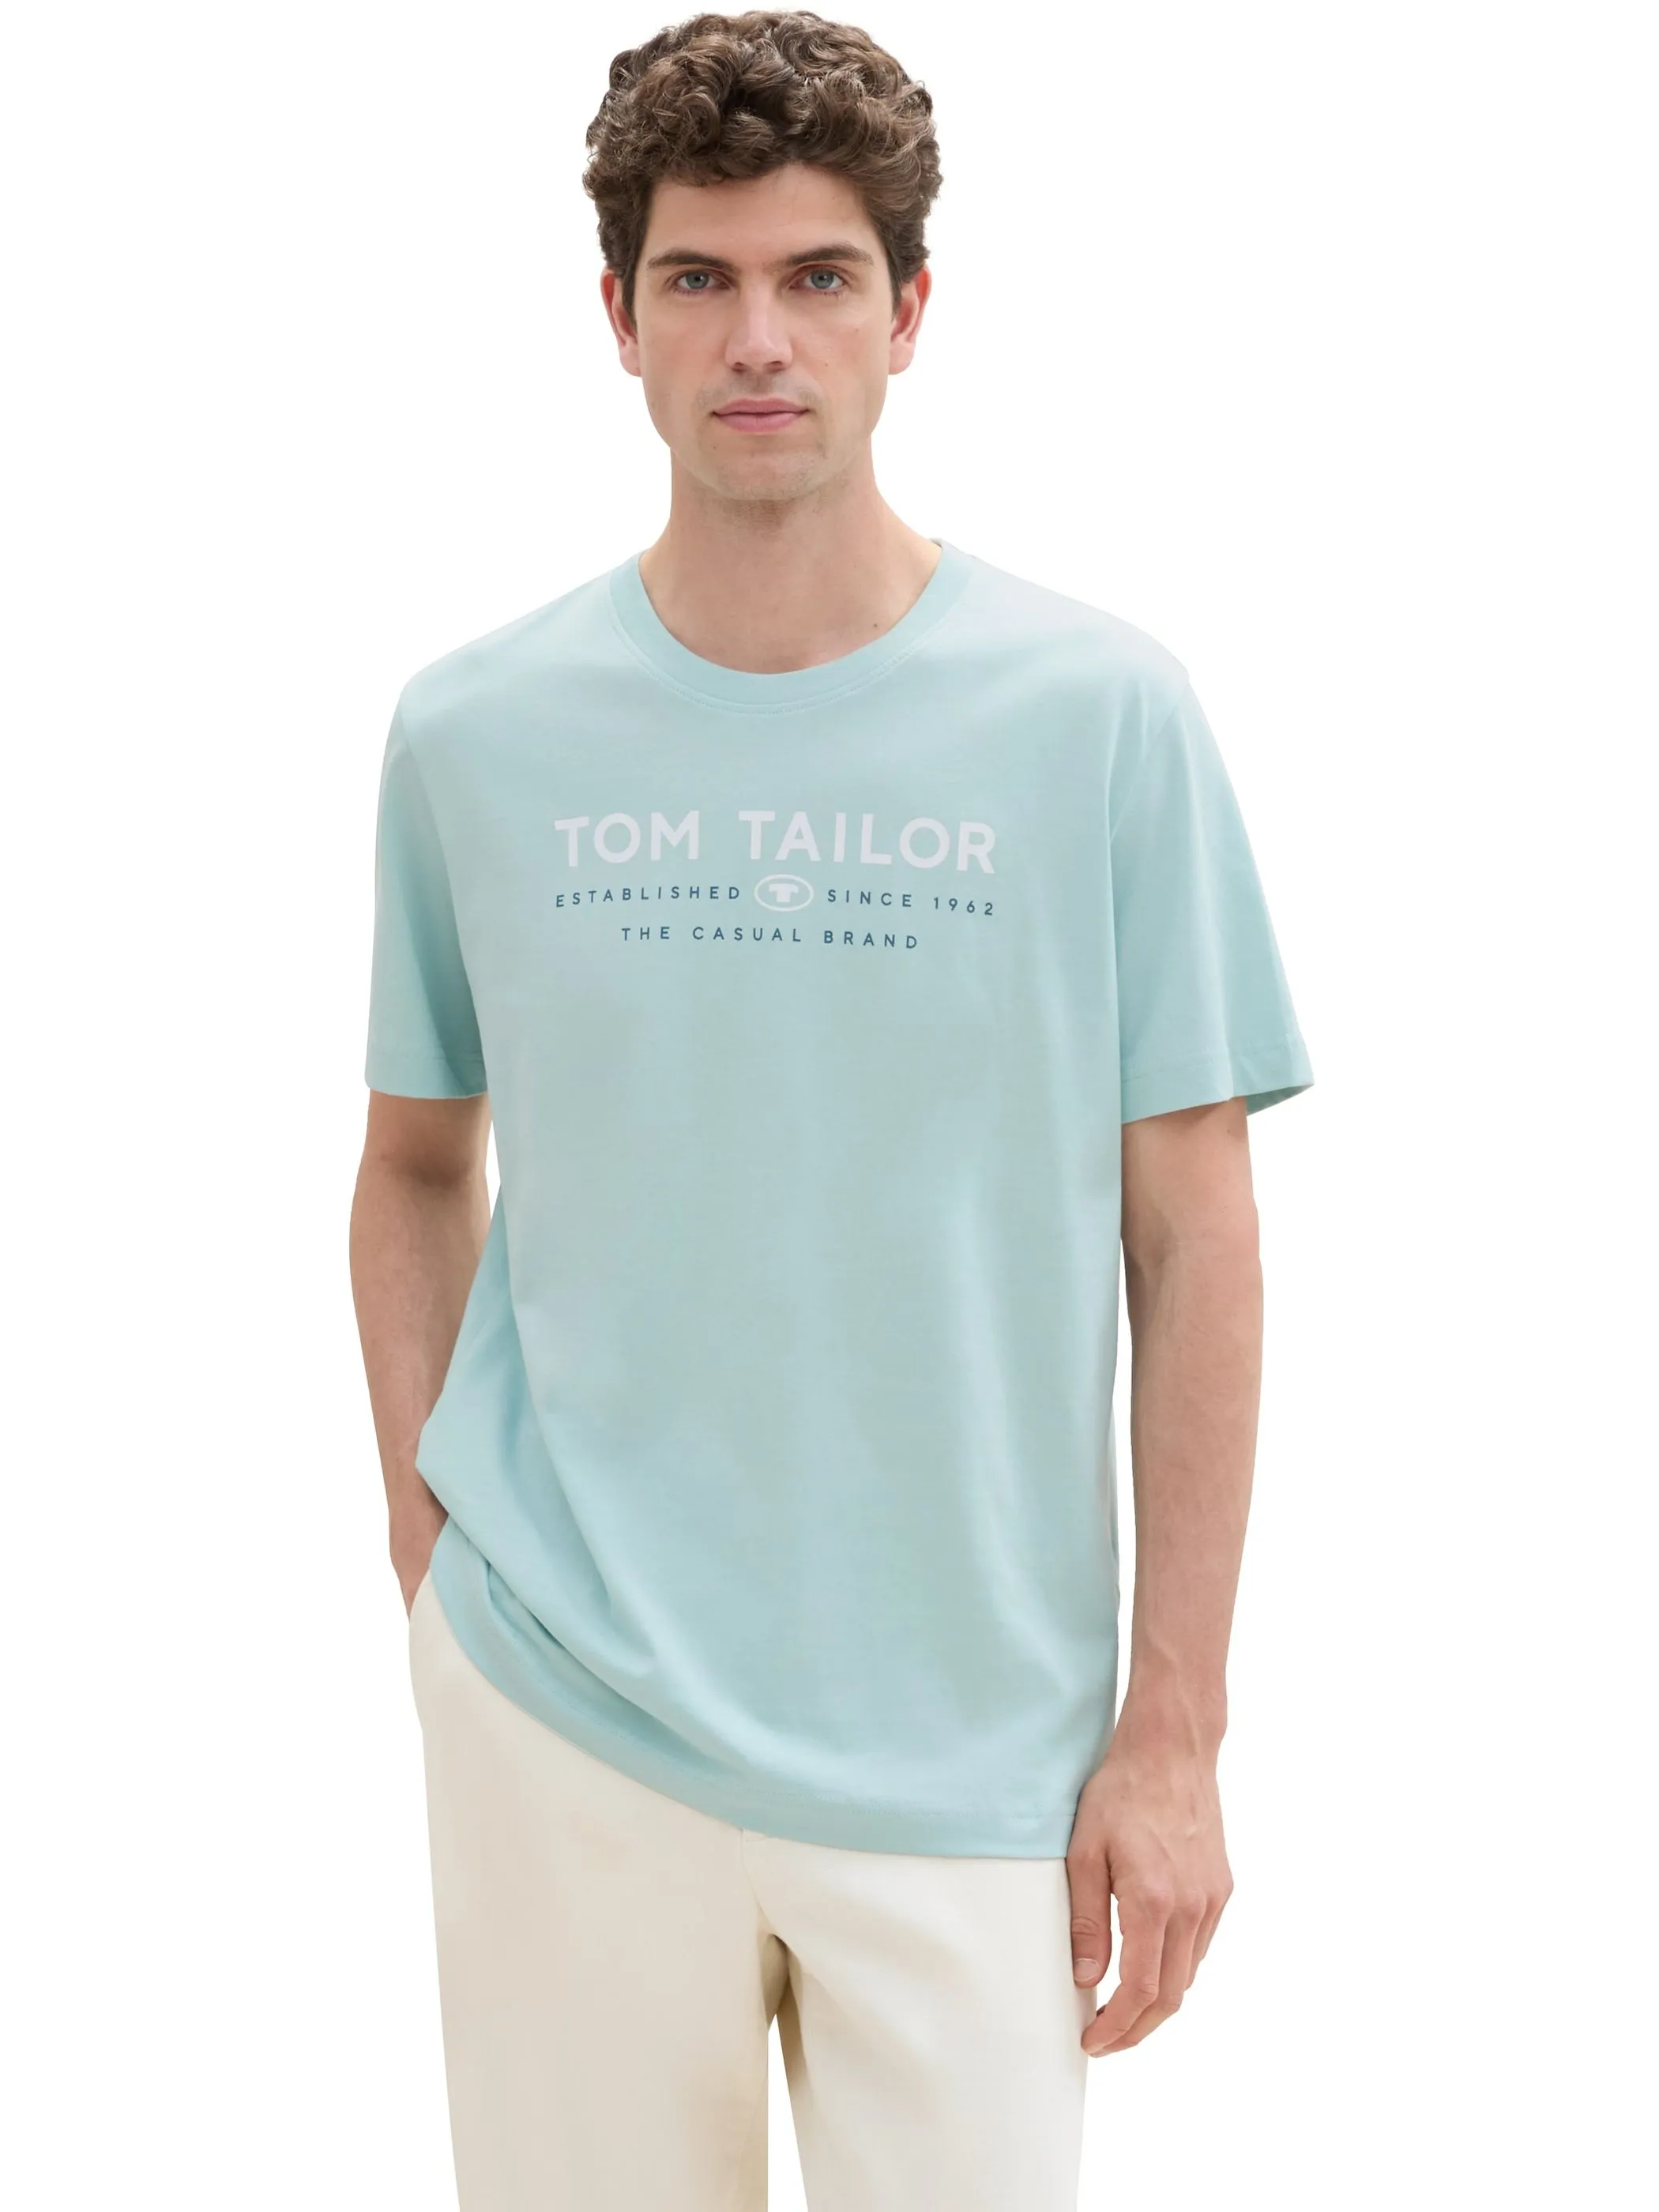 Tom Tailor 1043276 t-shirt with print Türkis 898849 30463 4